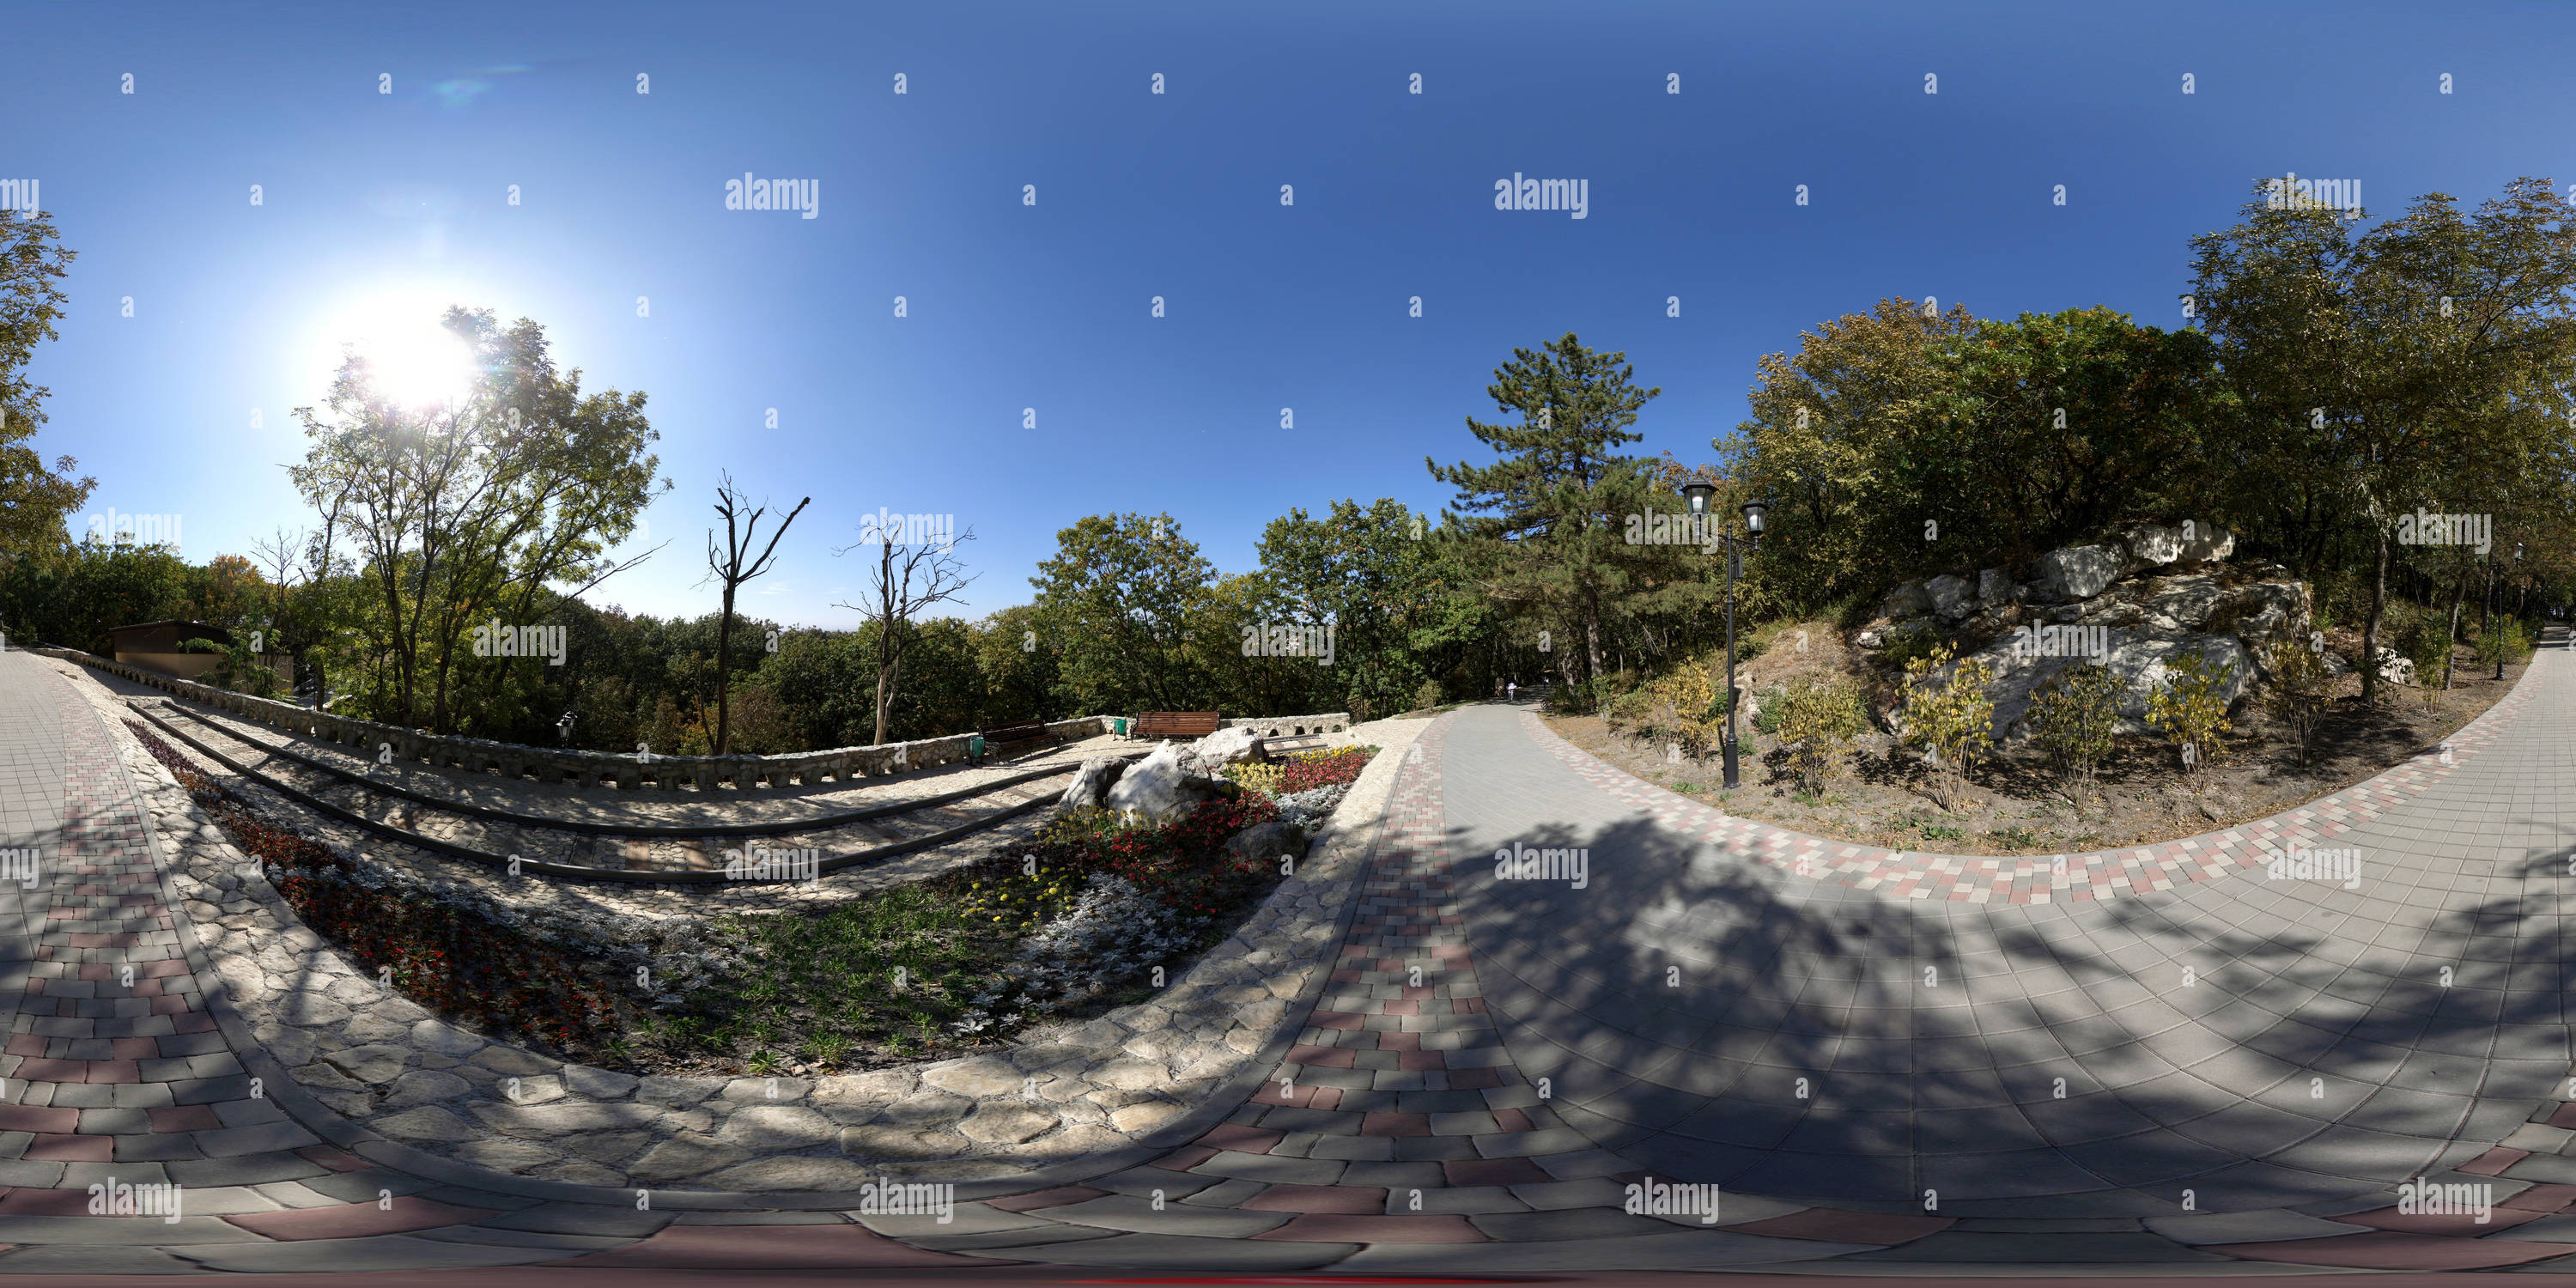 Visualizzazione panoramica a 360 gradi di Парк после реконструкции 2020. Инсталляция Рельсы